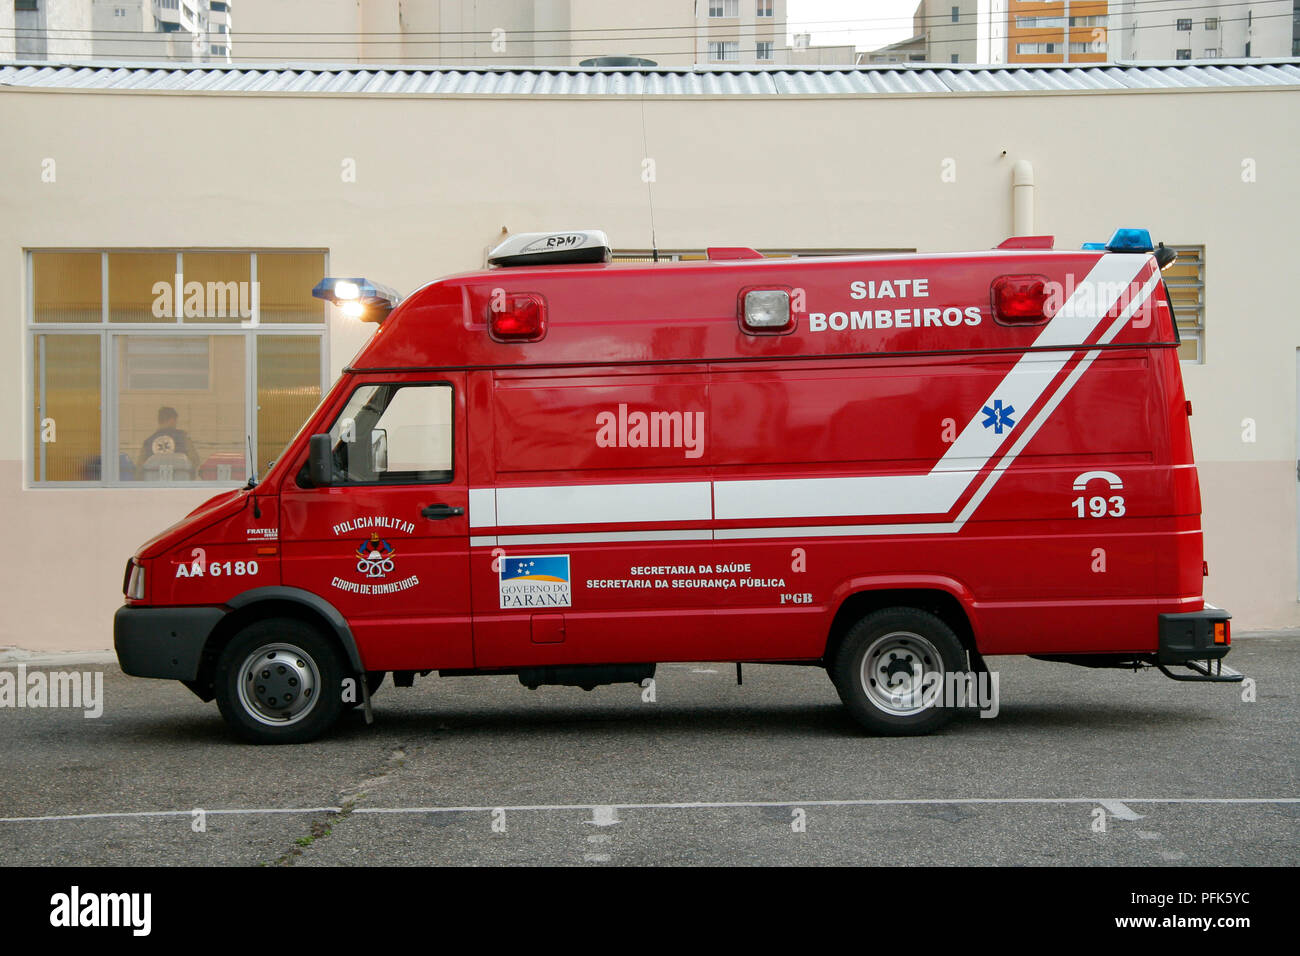 Brazilian fire brigade ambulance parked outside fire station, side view Stock Photo